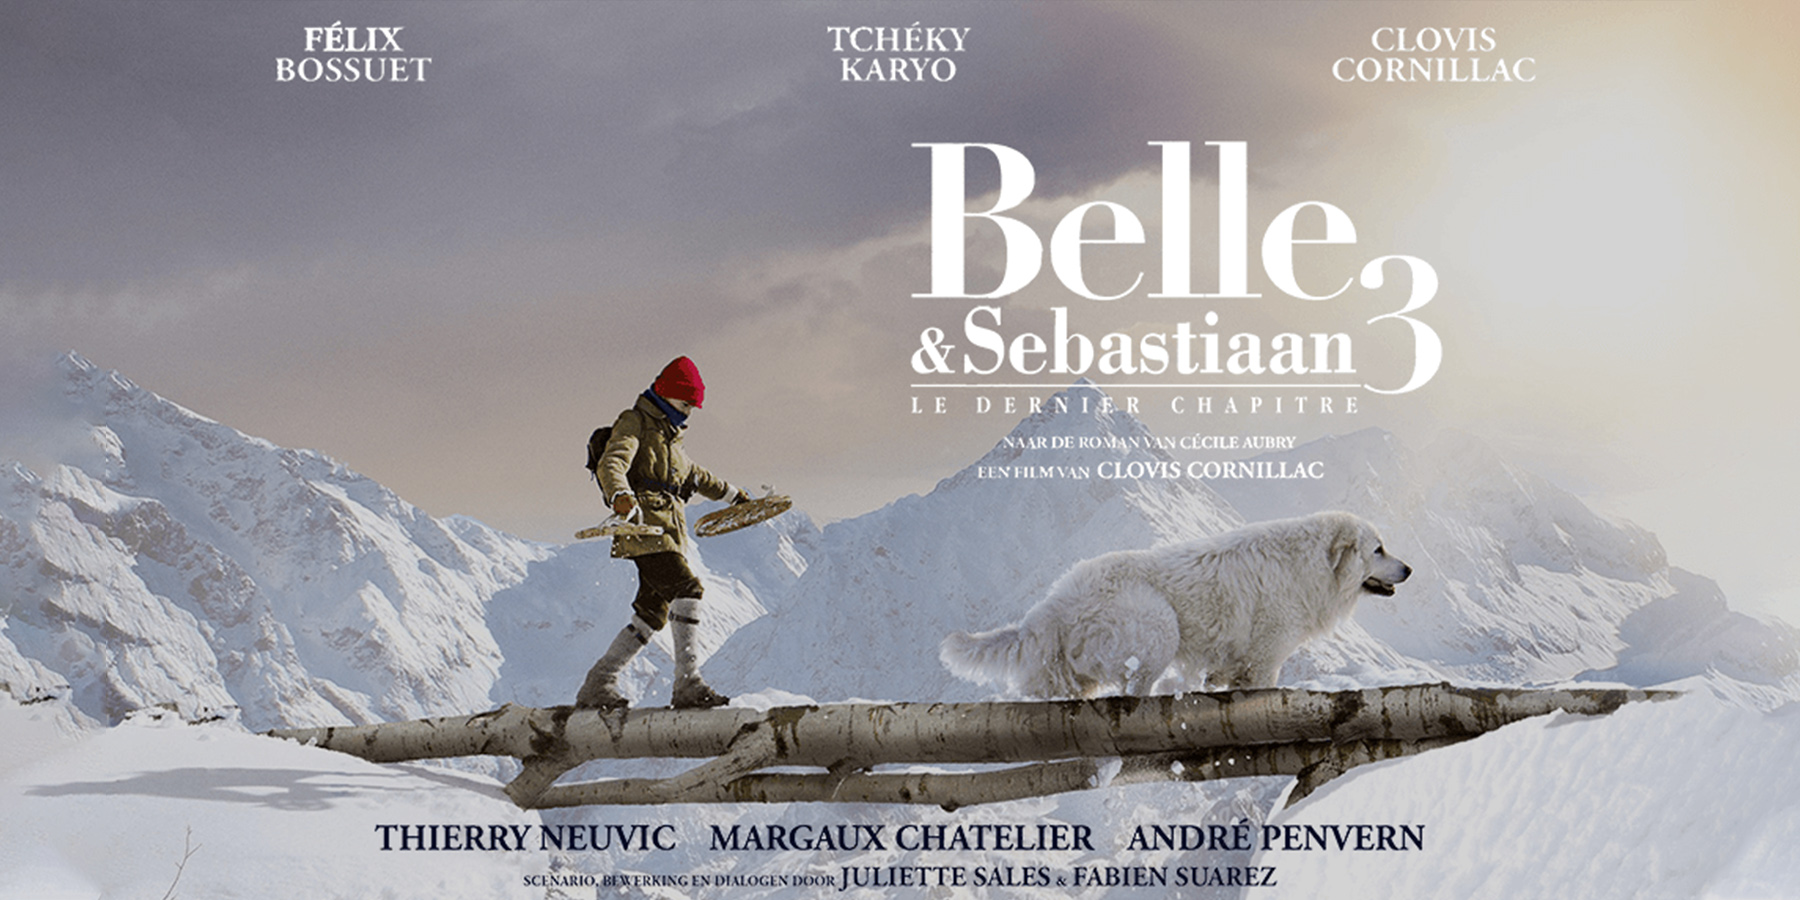 Belle Et Sebestien 3 Movie Poster